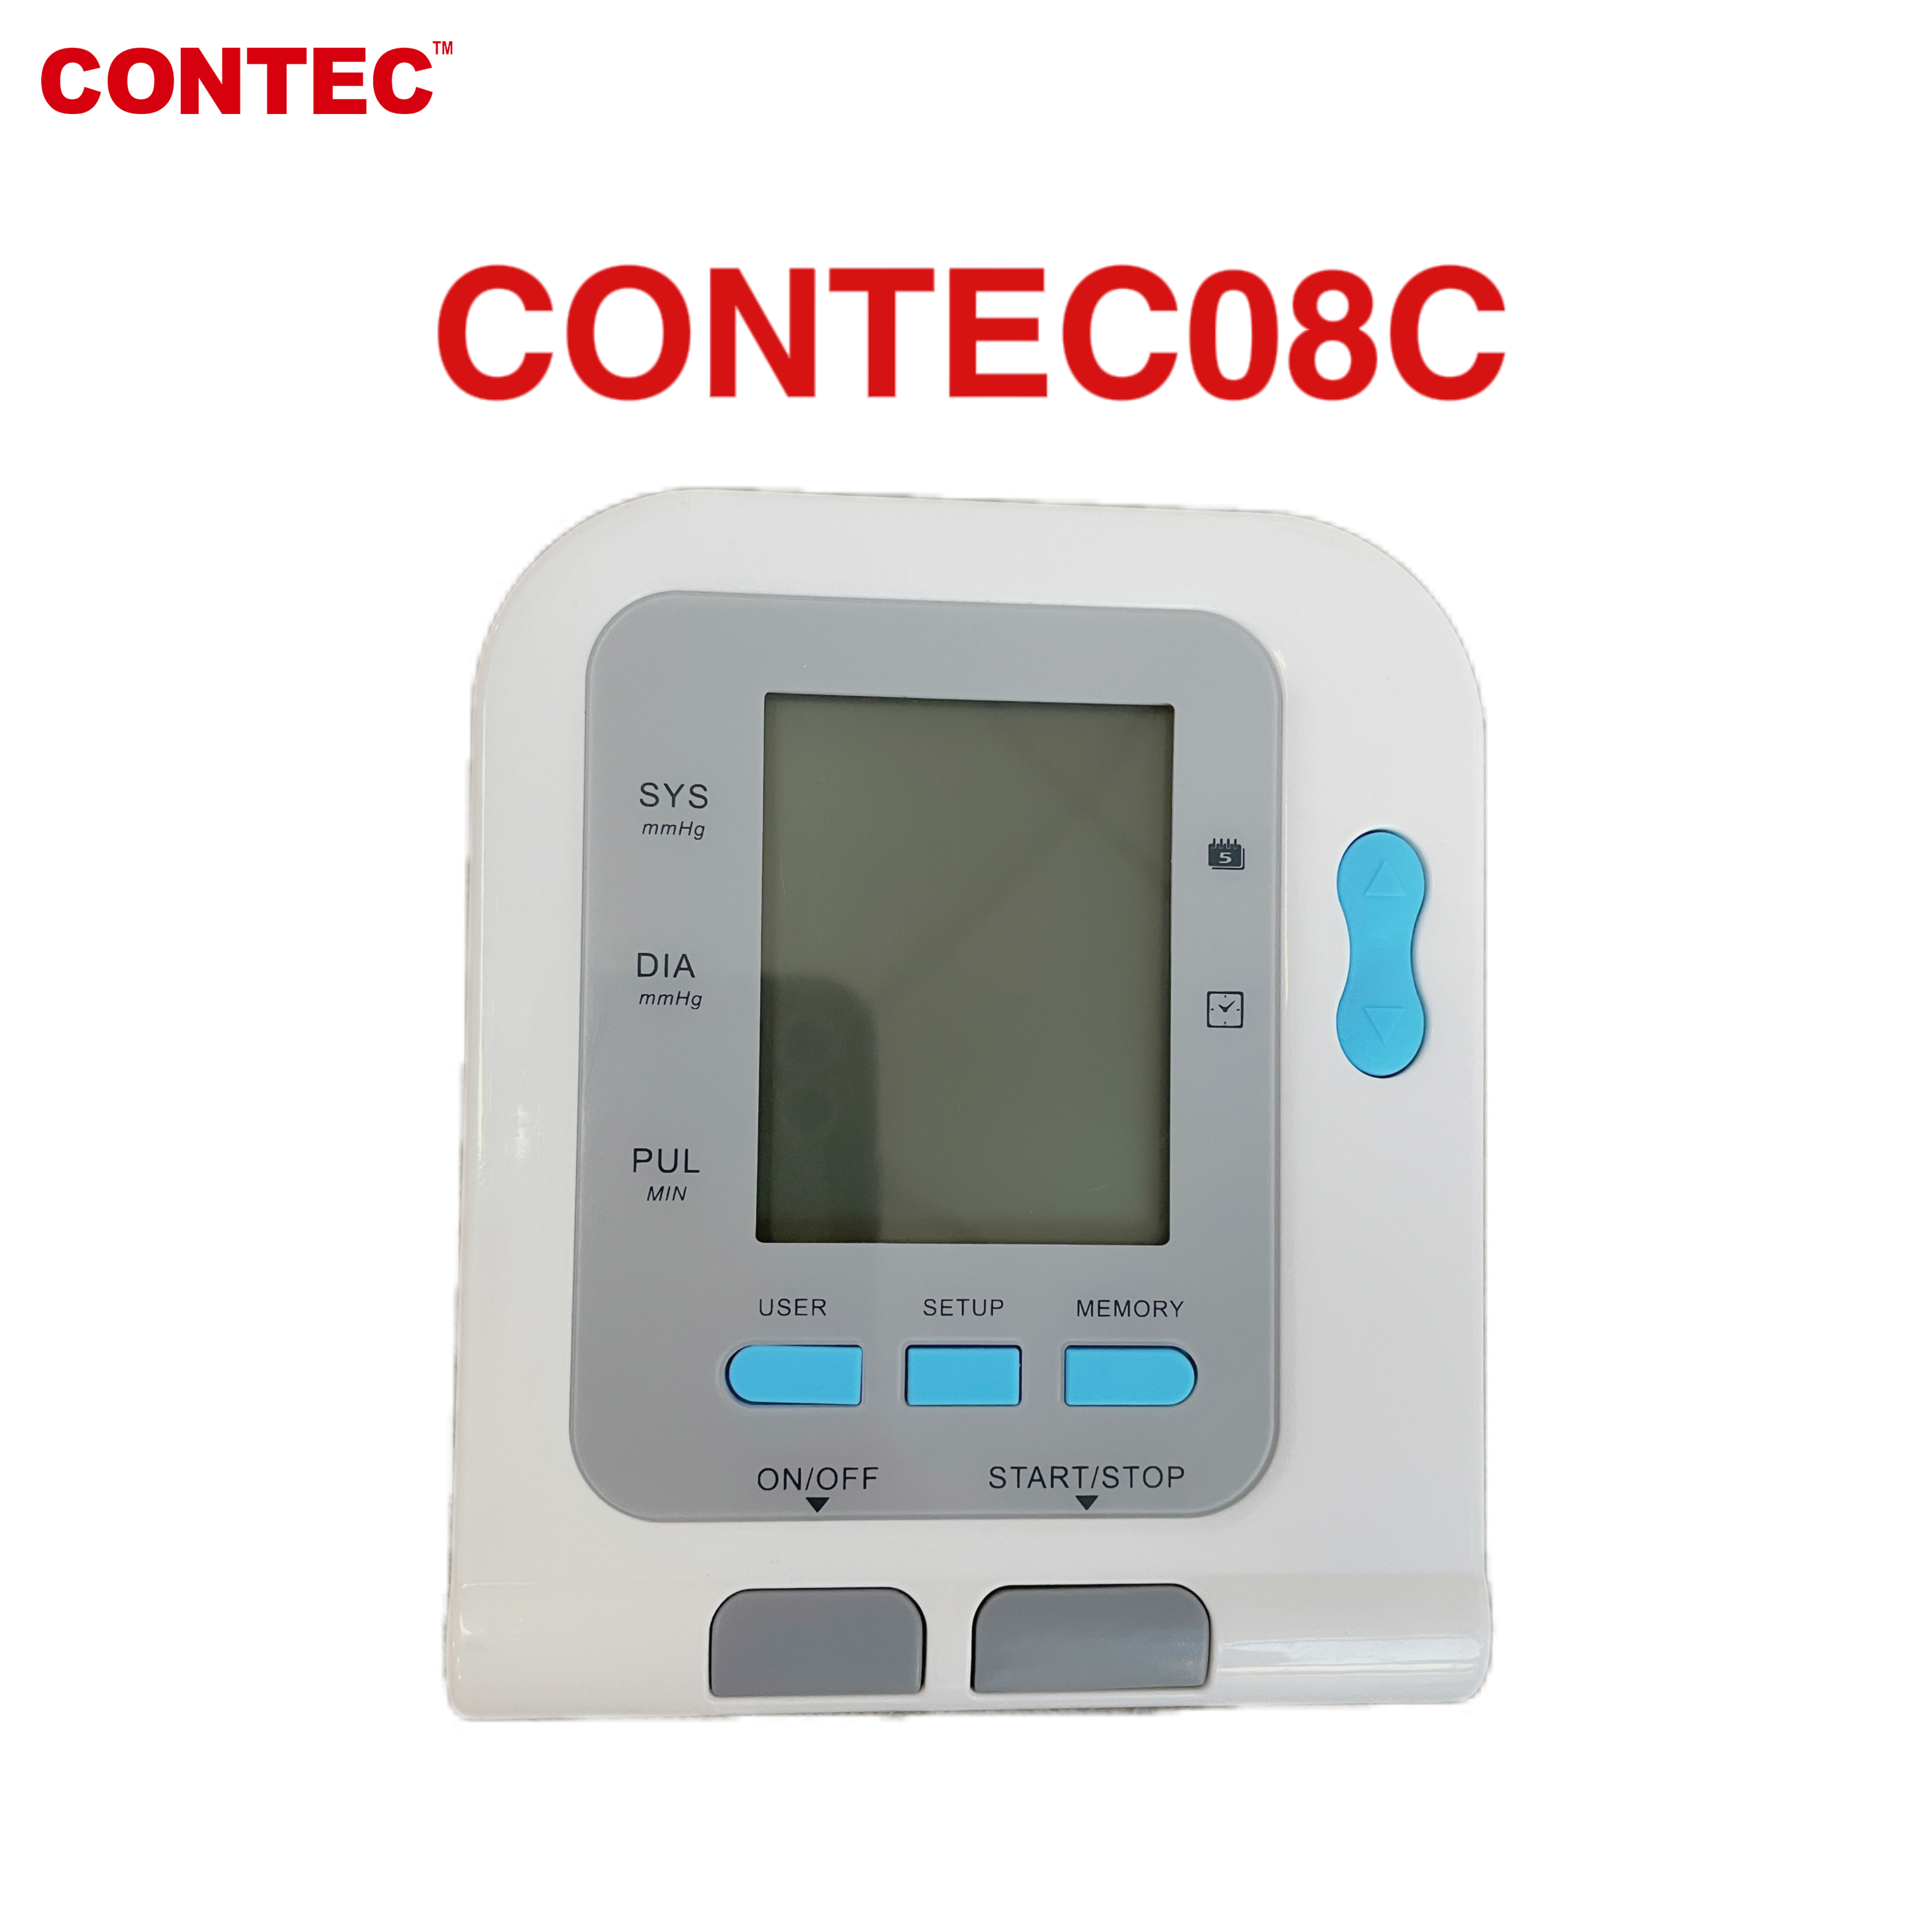 CONTEC08C Manchet Digitale Bloeddrukmeter Bloeddrukmeter, Nibp Polsslag